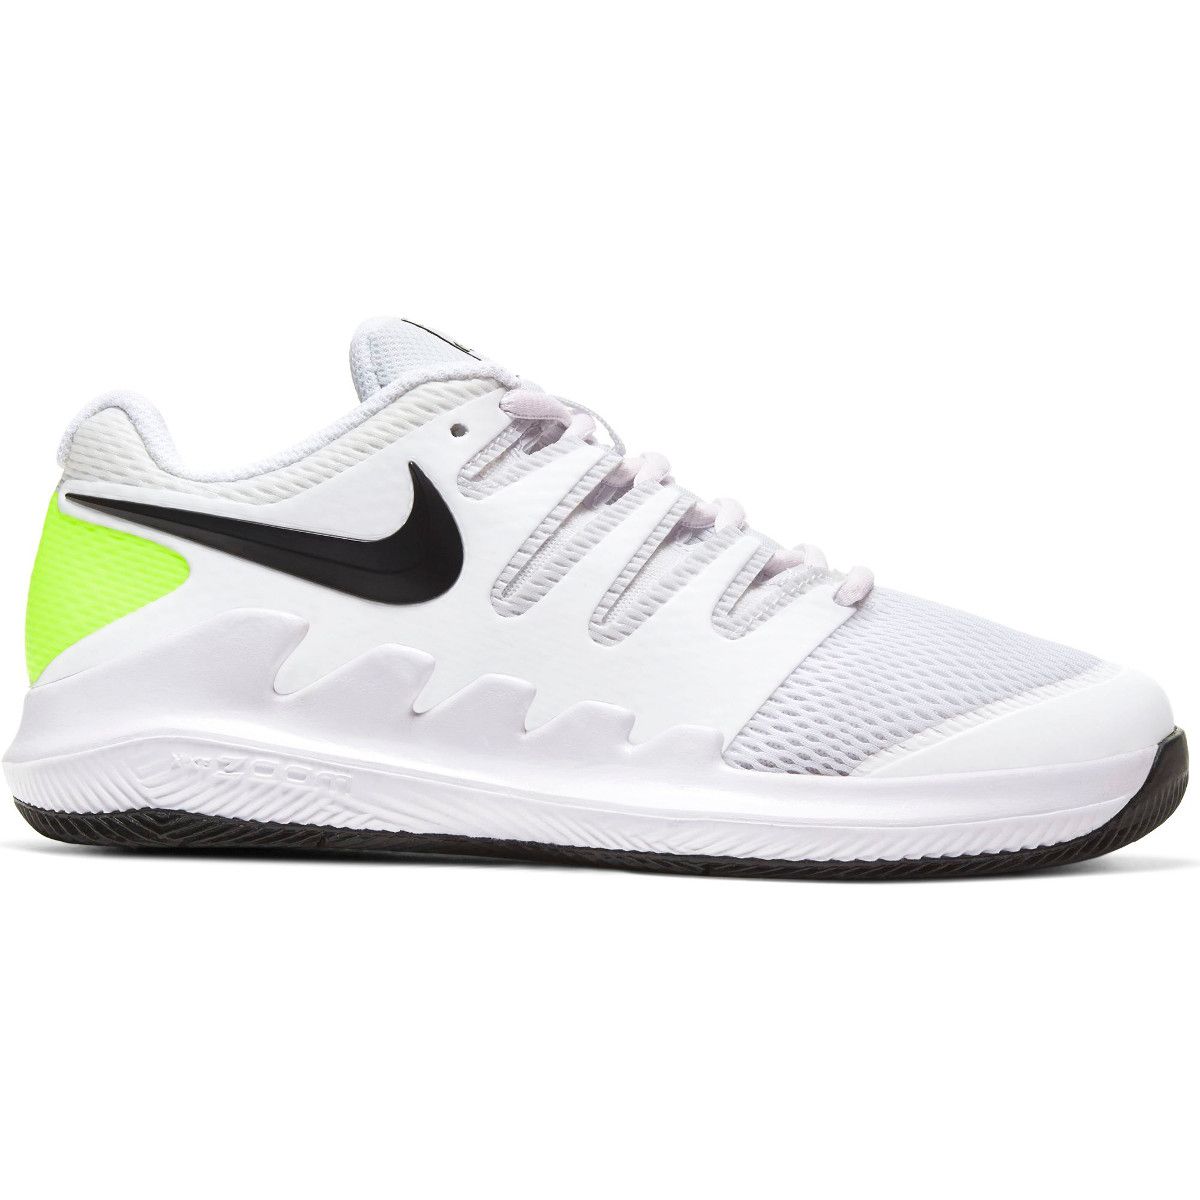 NikeCourt Vapor X Junior Tennis Shoes AR8851-101